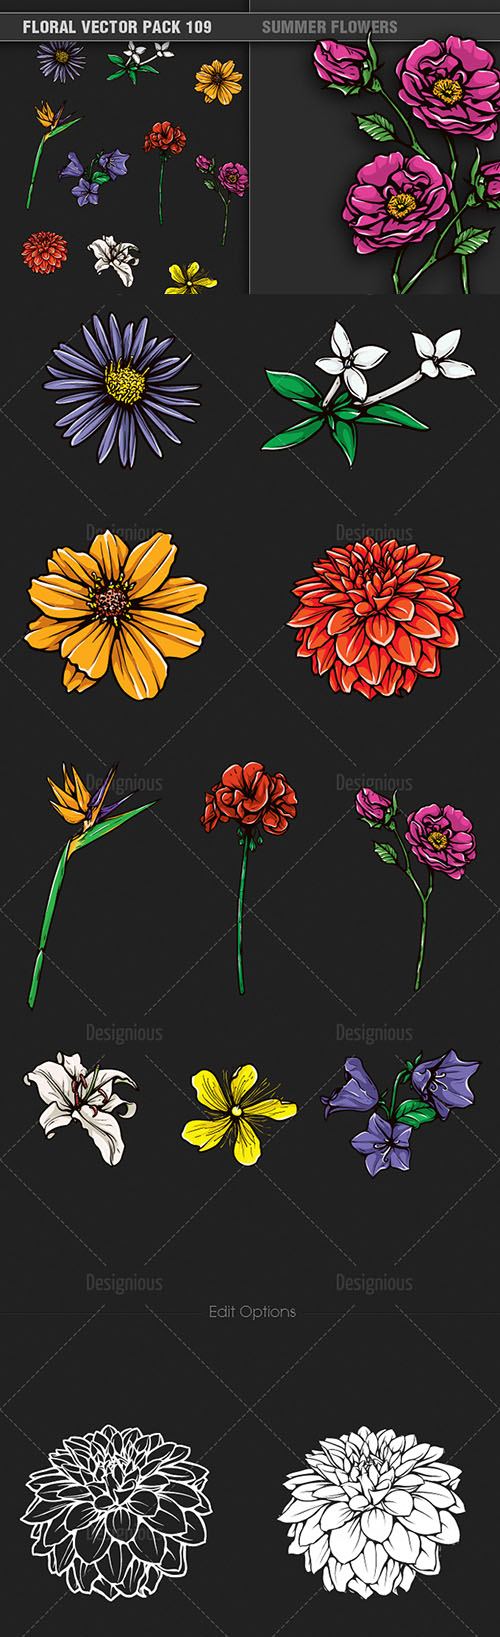 Summer Flowers Vector Illustrations Pack 109